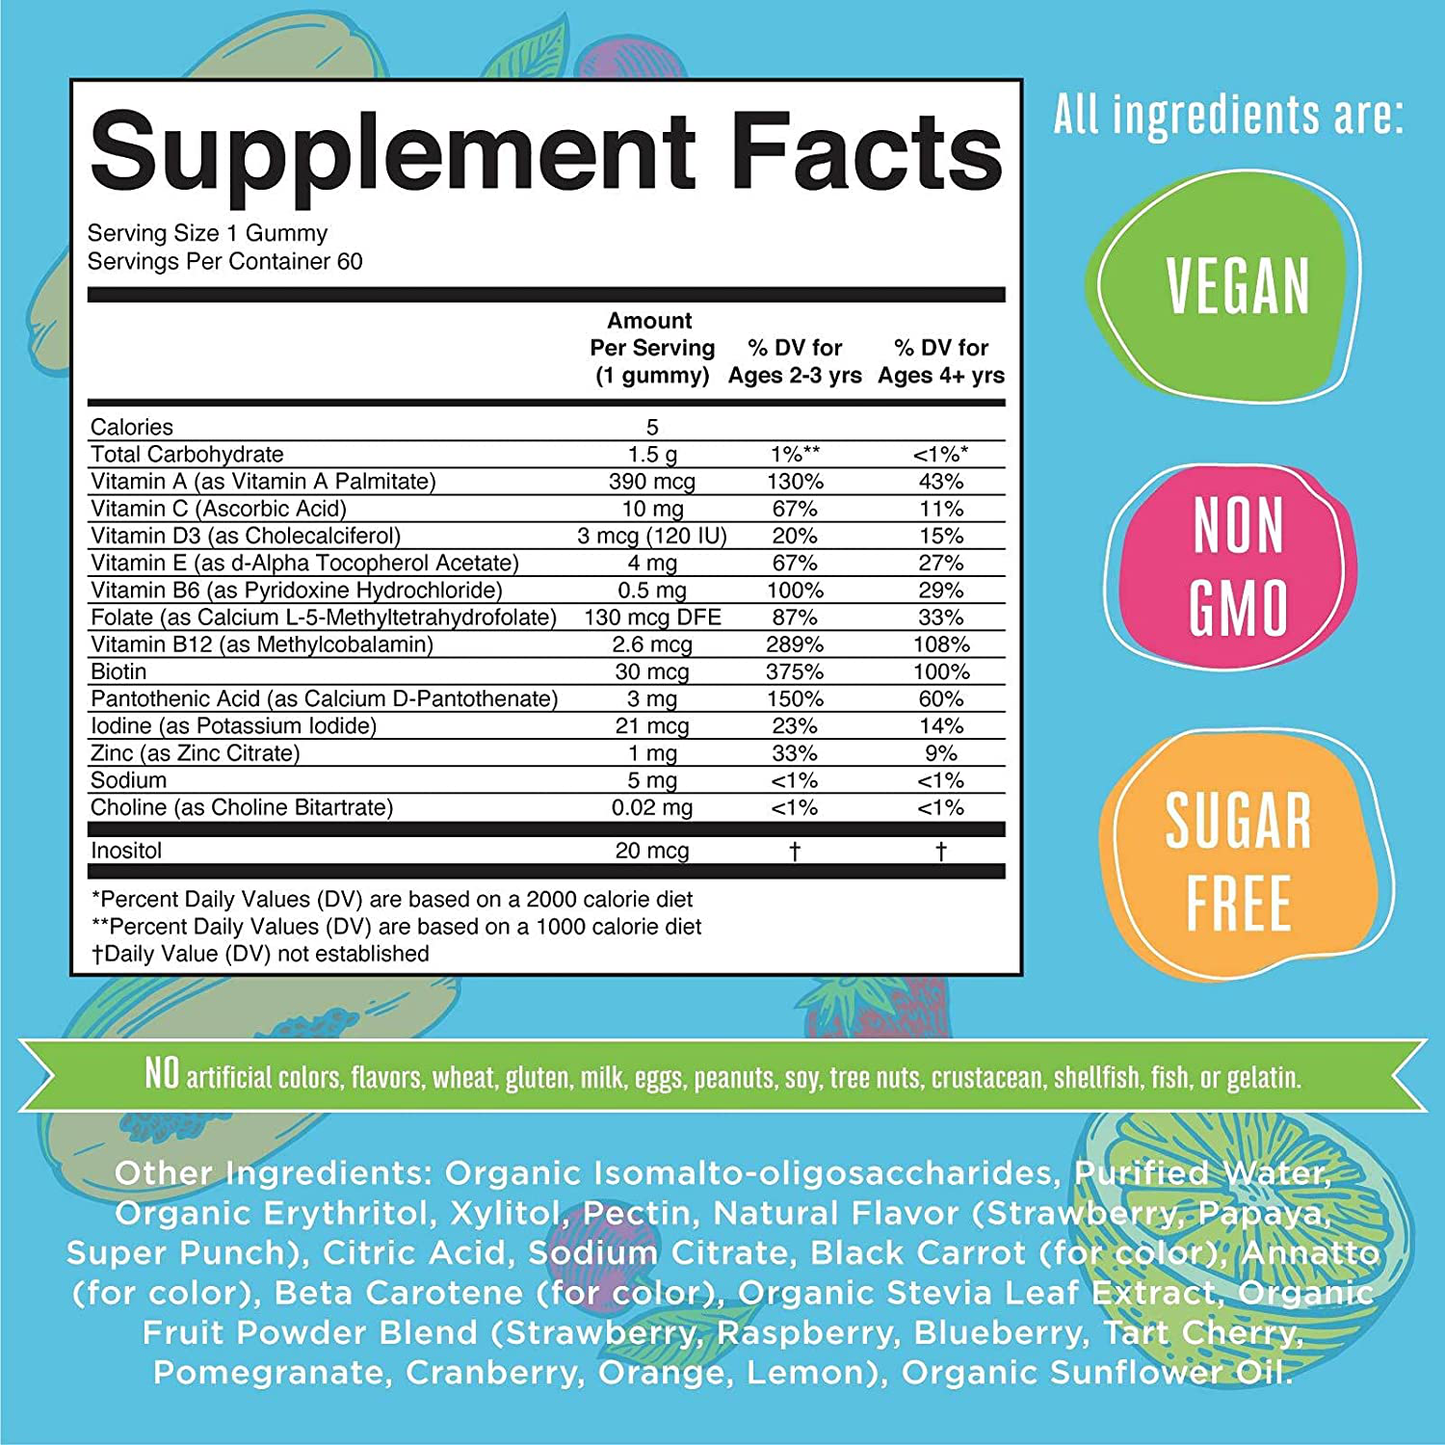 Vegan Kids Multivitamin Gummies by MaryRuth's | 2 Month Supply | Organic Ingredients for Immunity Bones Muscles | 260 mcg Methylfolate Sugar Free Non-GMO | Great Tasting Chewable Vitamins for Children